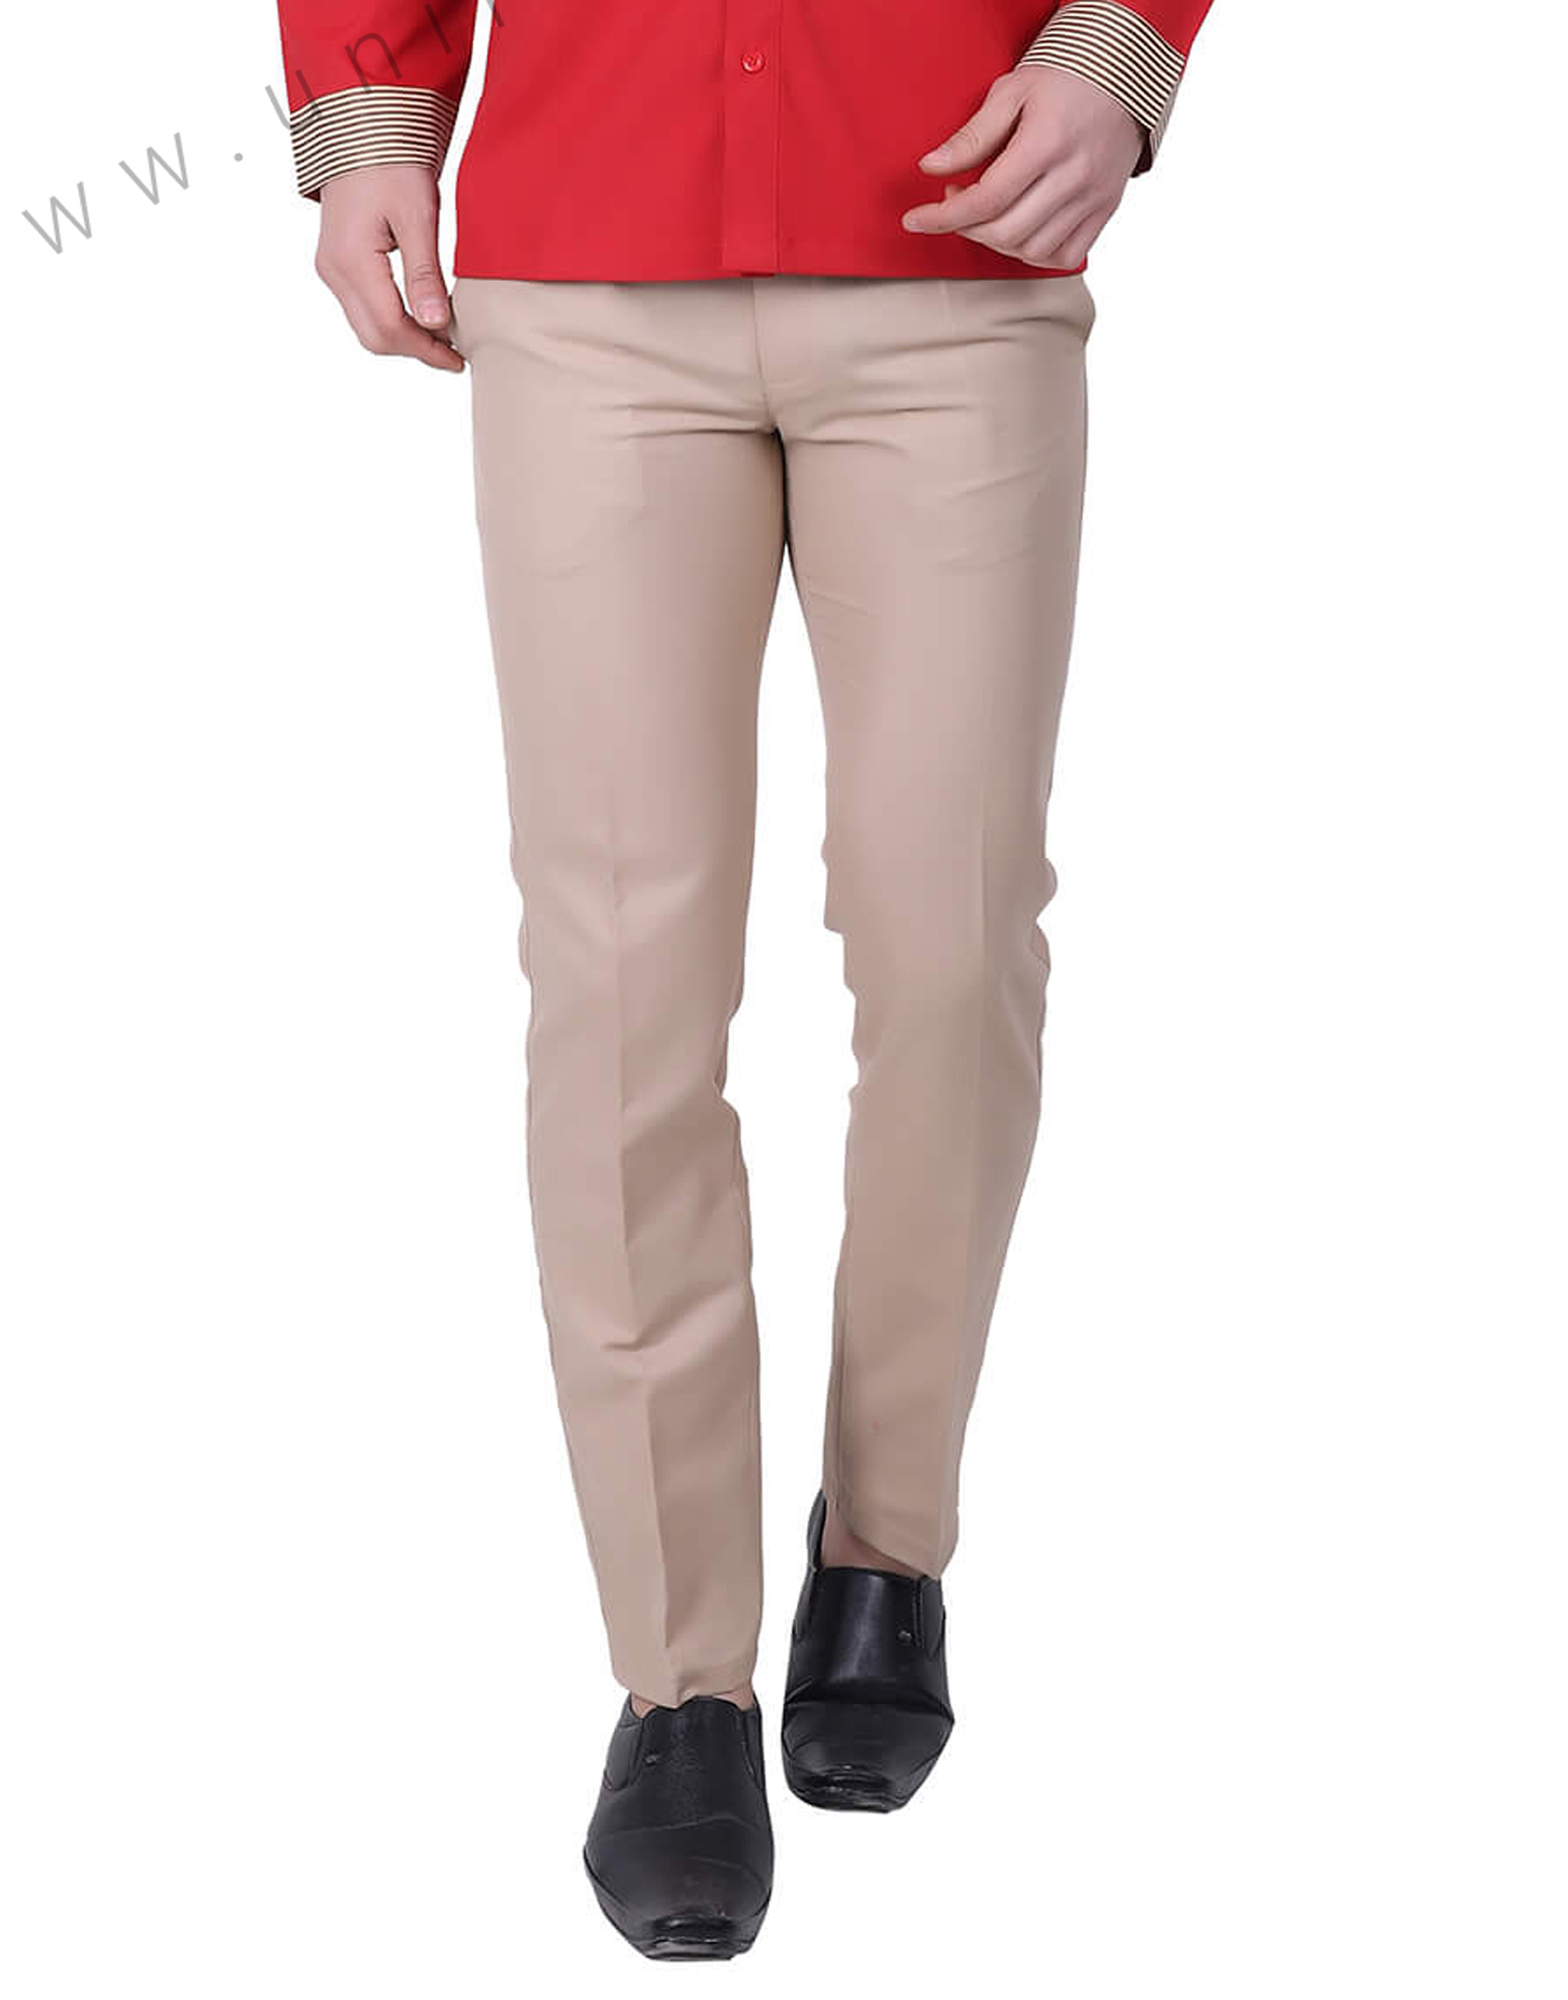 Buy Baggy Breeches Online polo pants Royal Jodhpurs Riding trousers